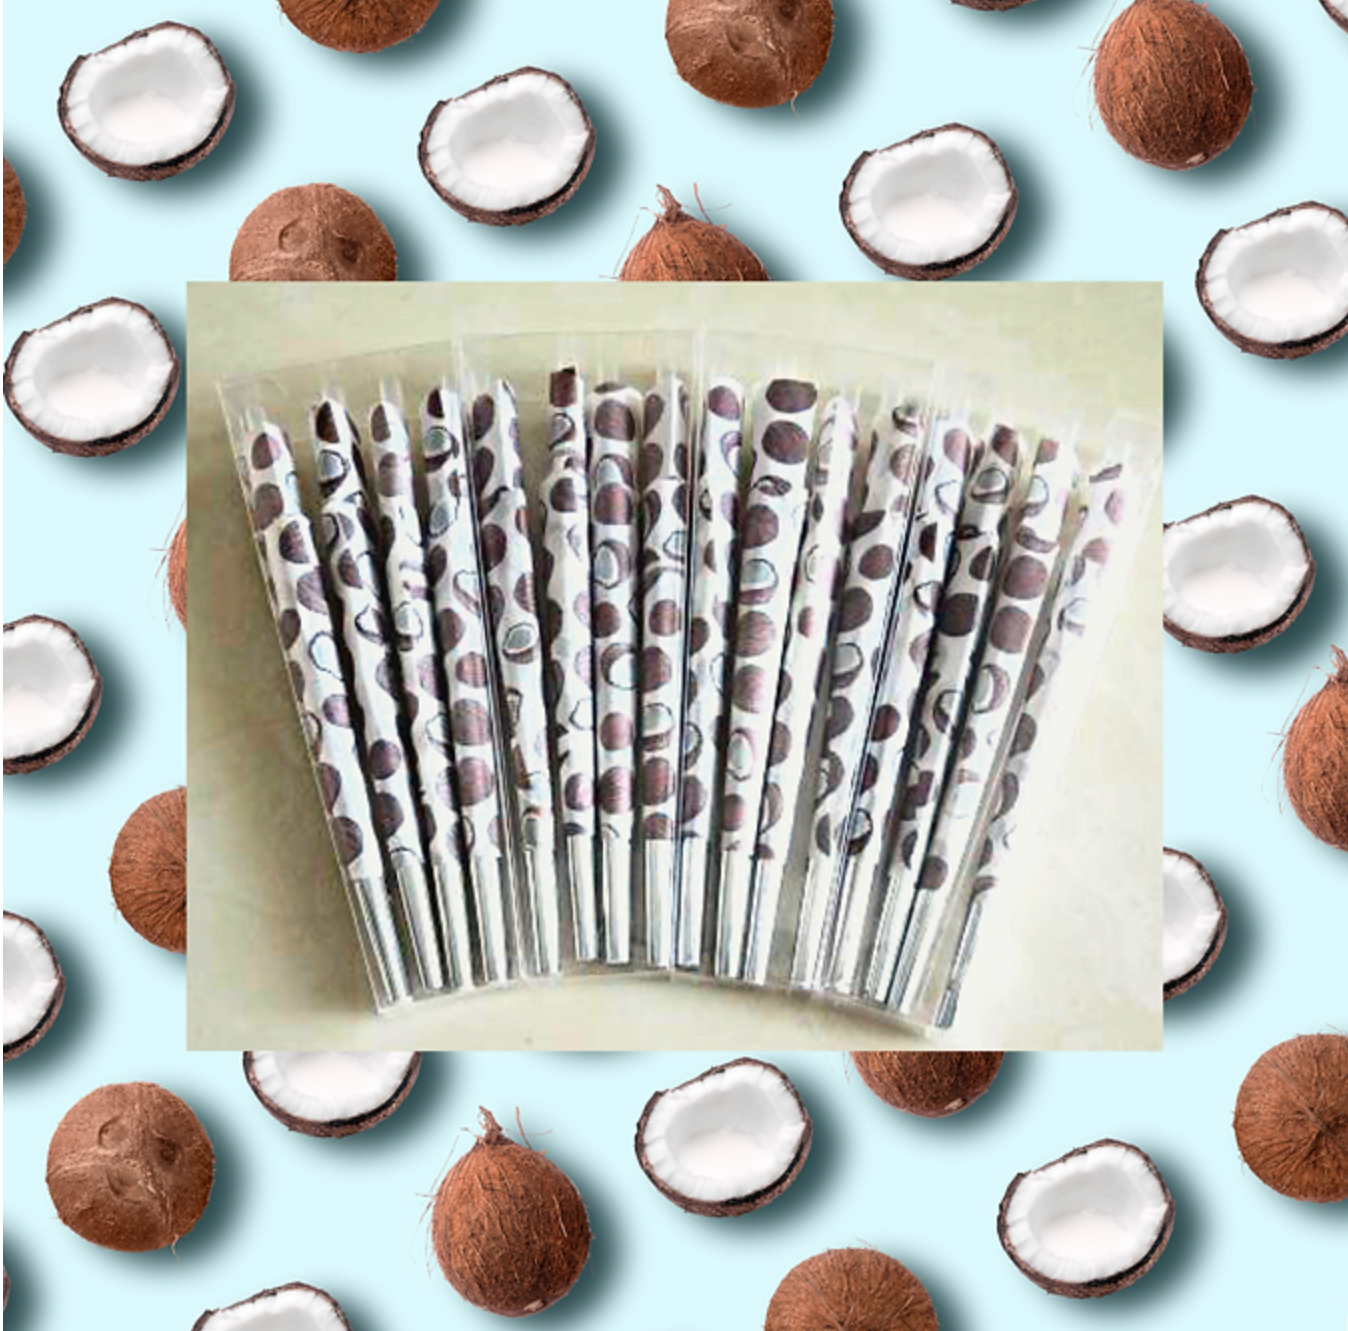 Coconut flavored cones